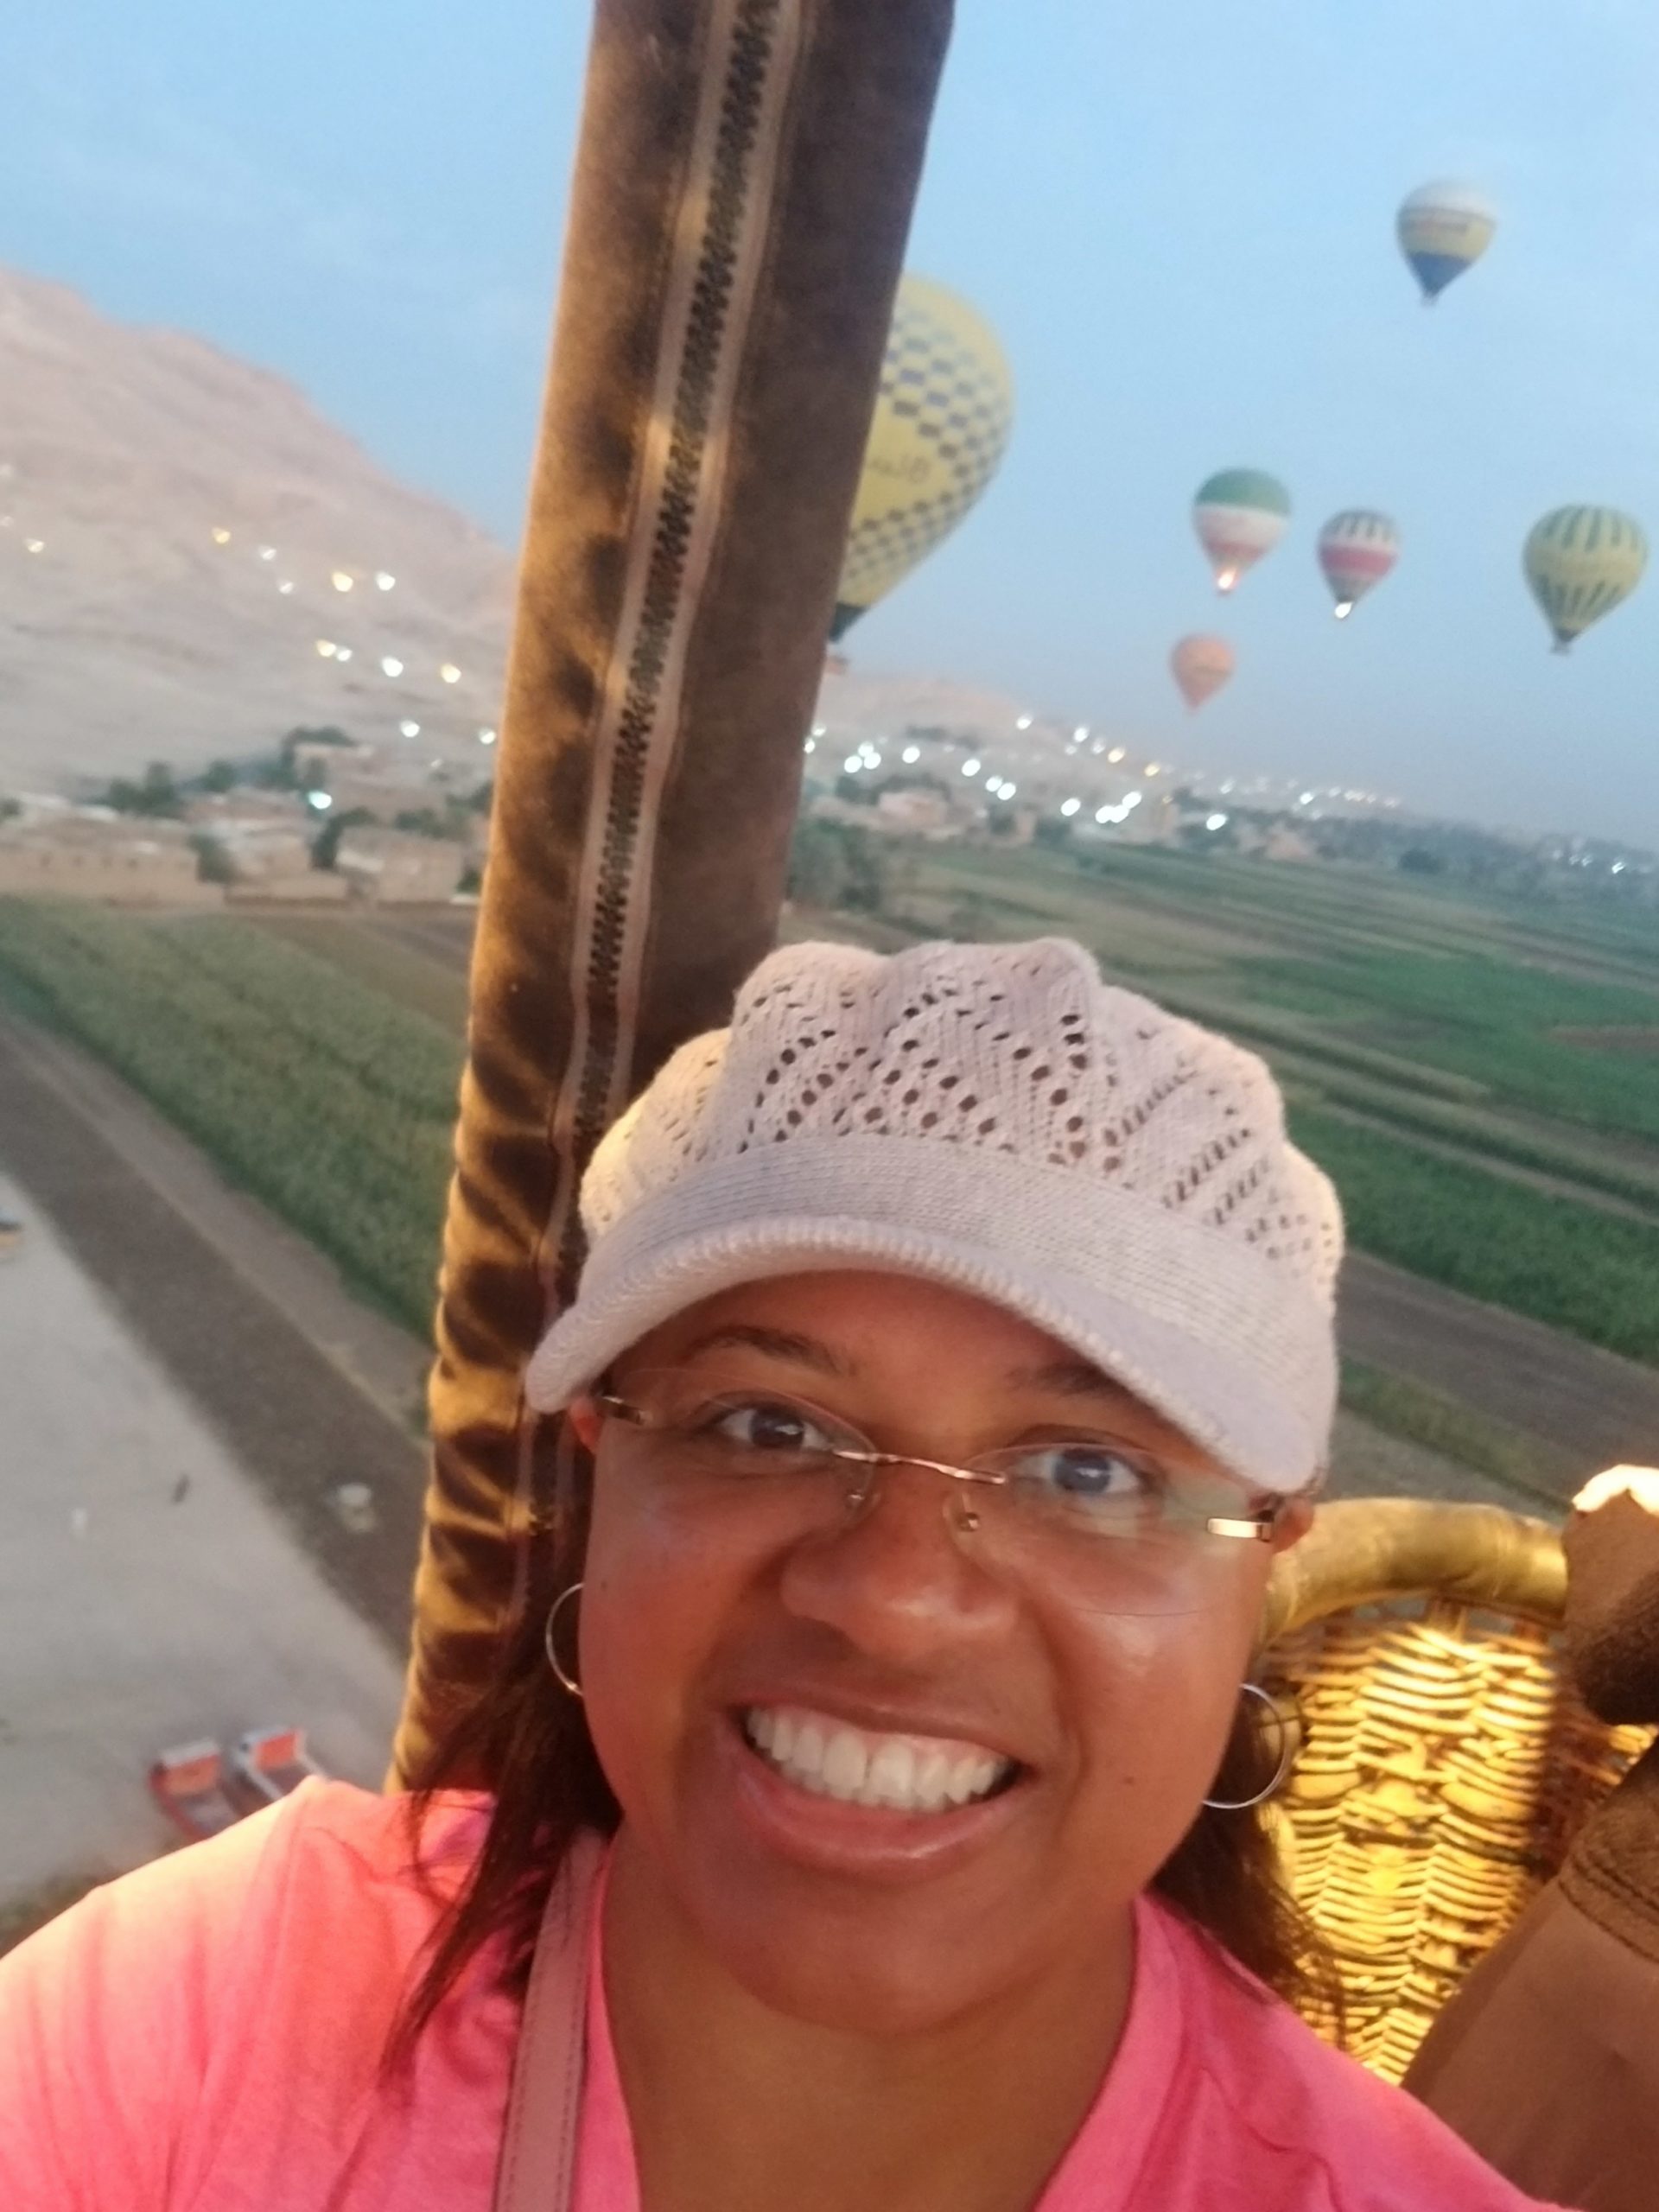 Chrystal Walker in hot air balloon